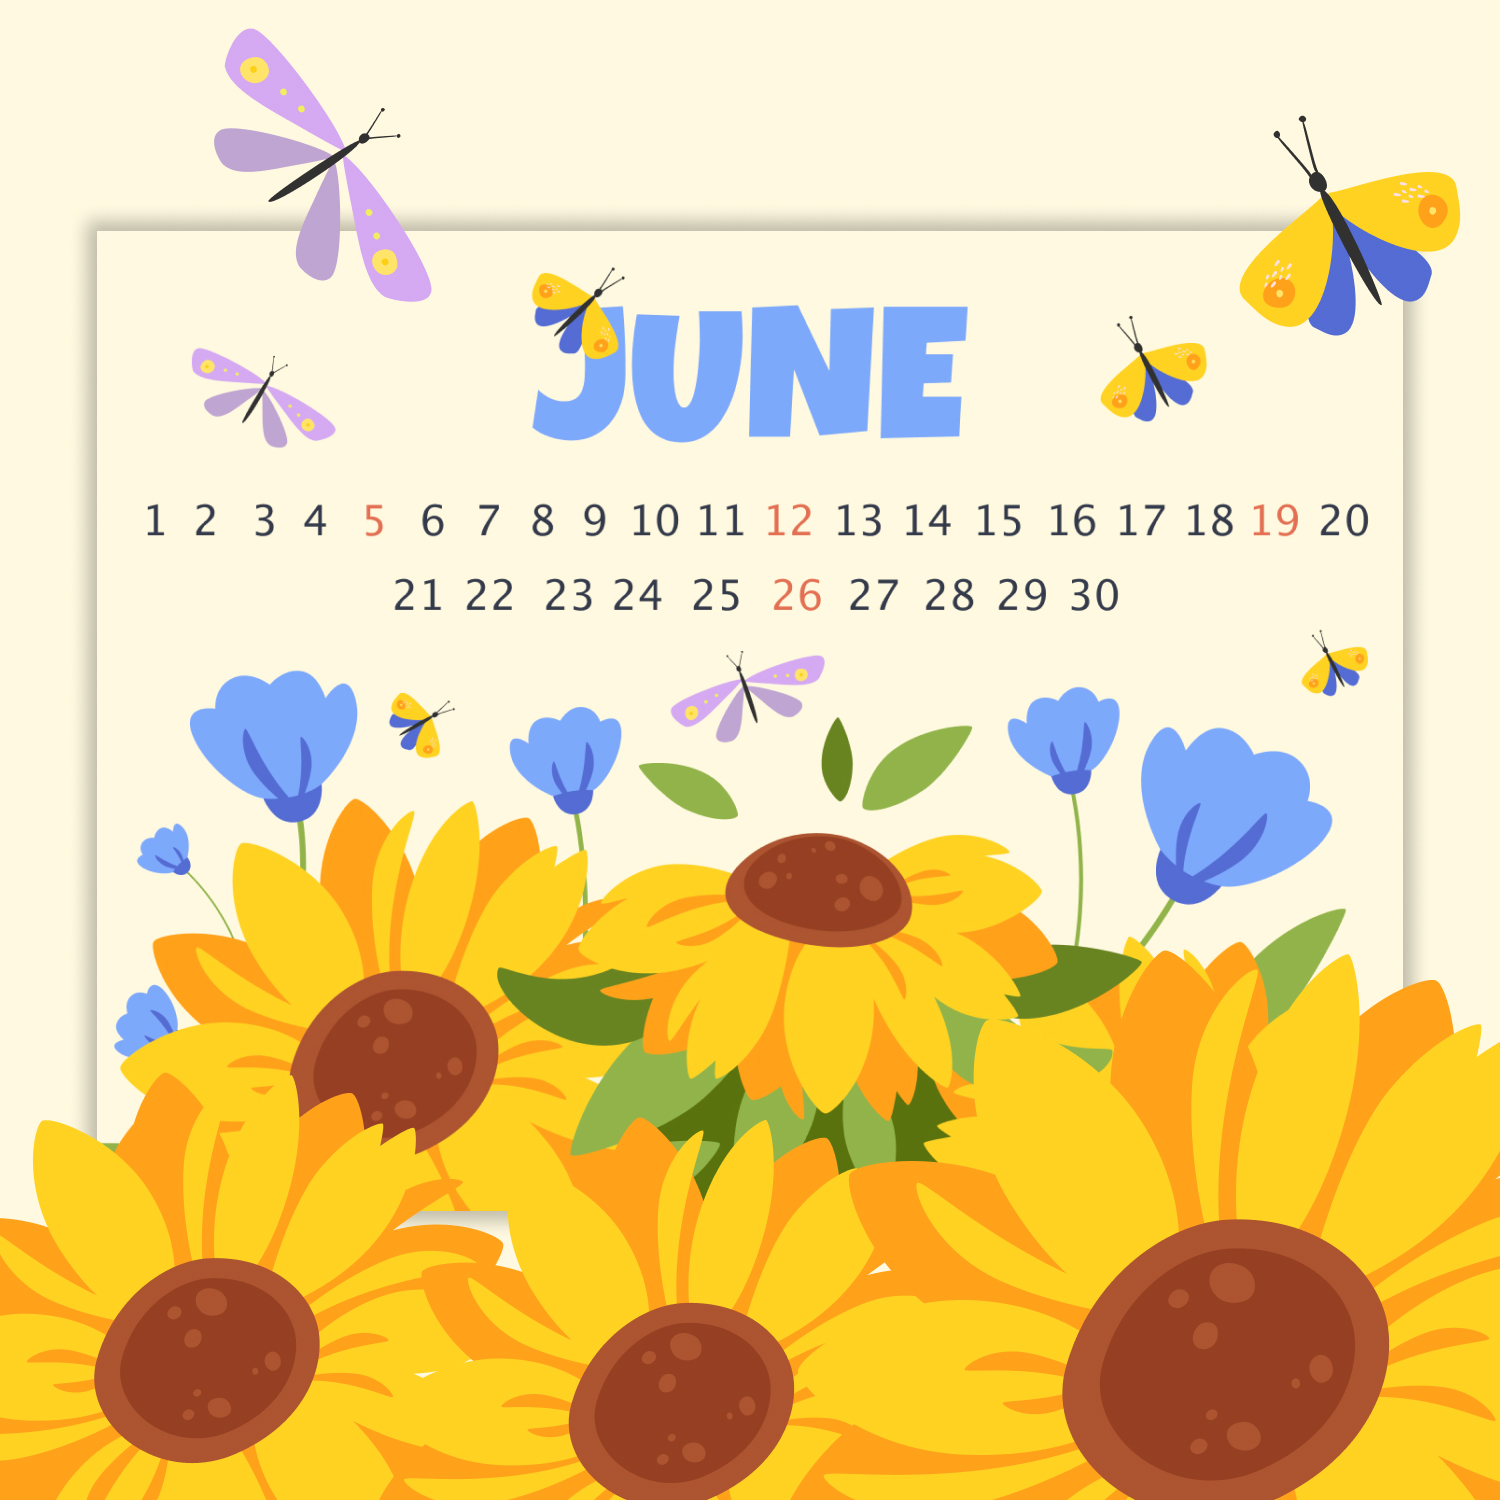 Ukraine Flowers Free June Calendar cover.